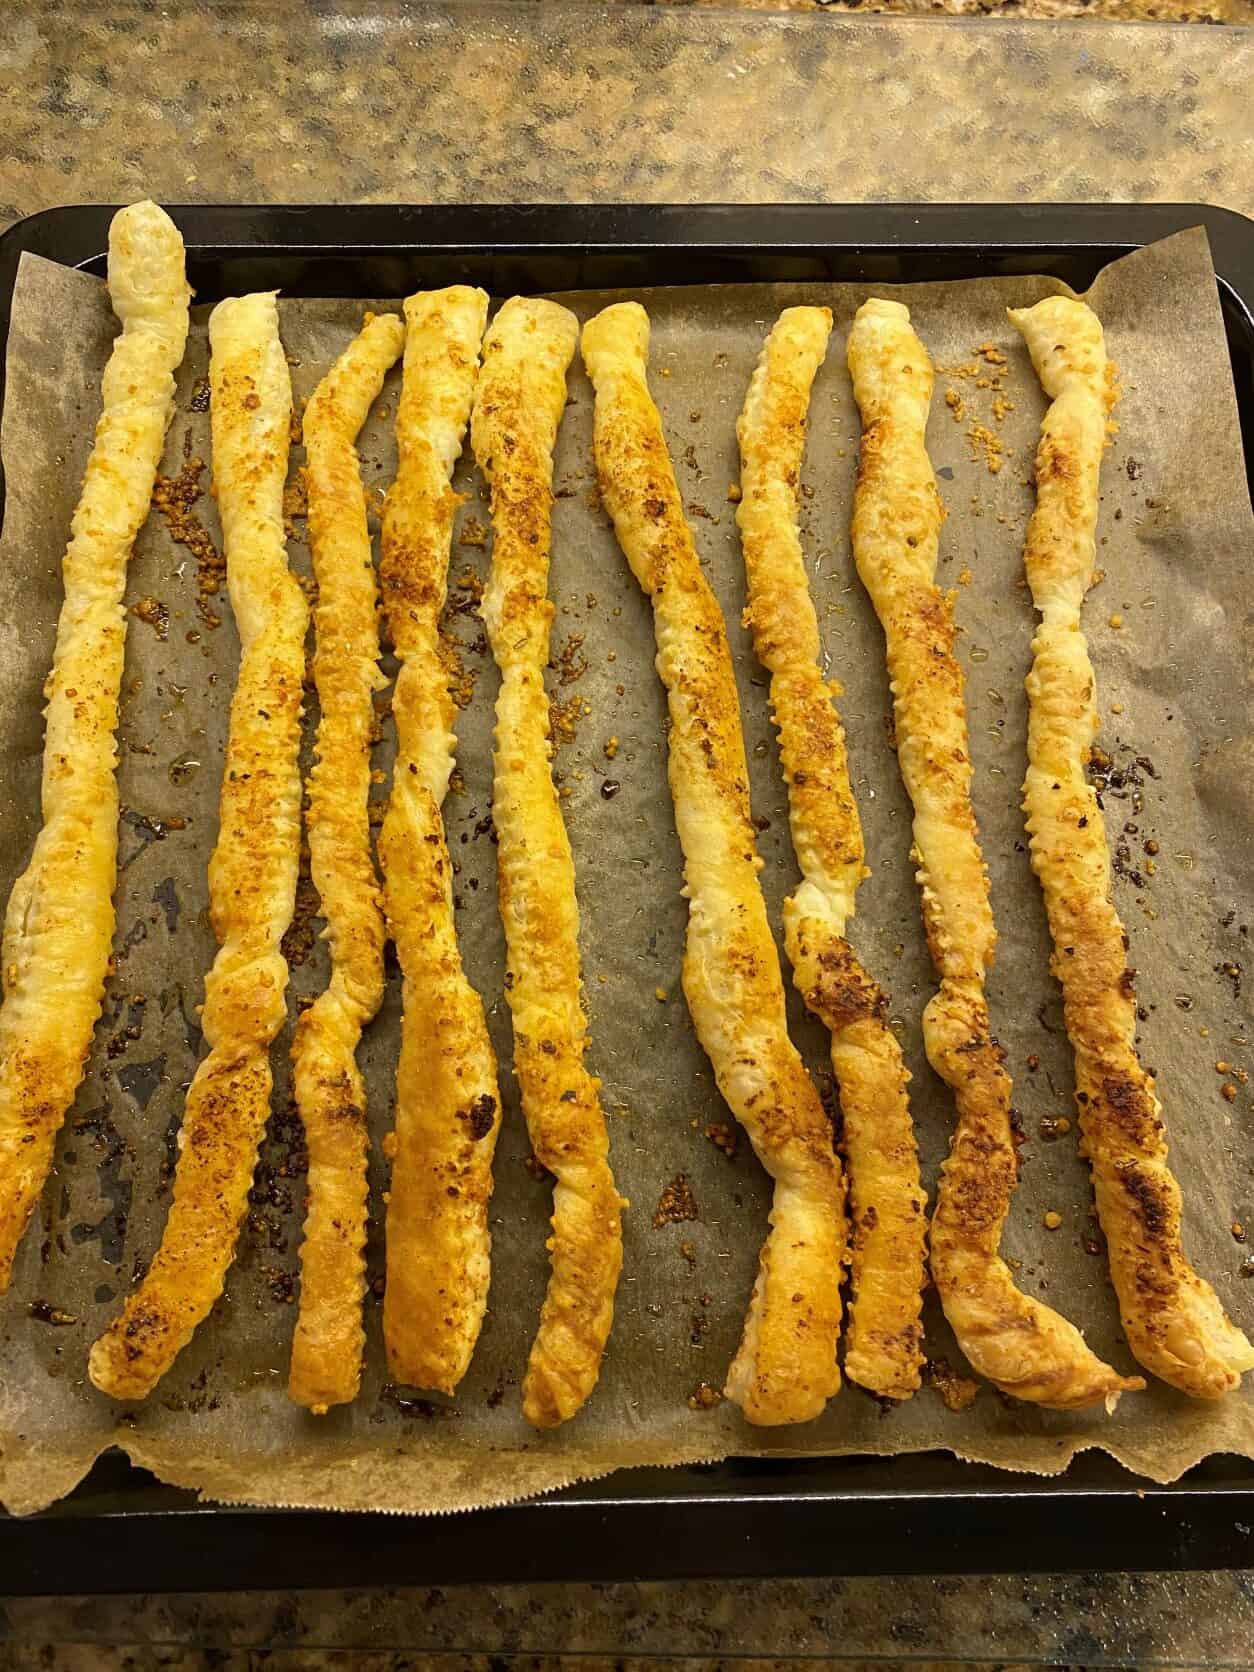 baked Garlic Bread Sticks on a baking tray